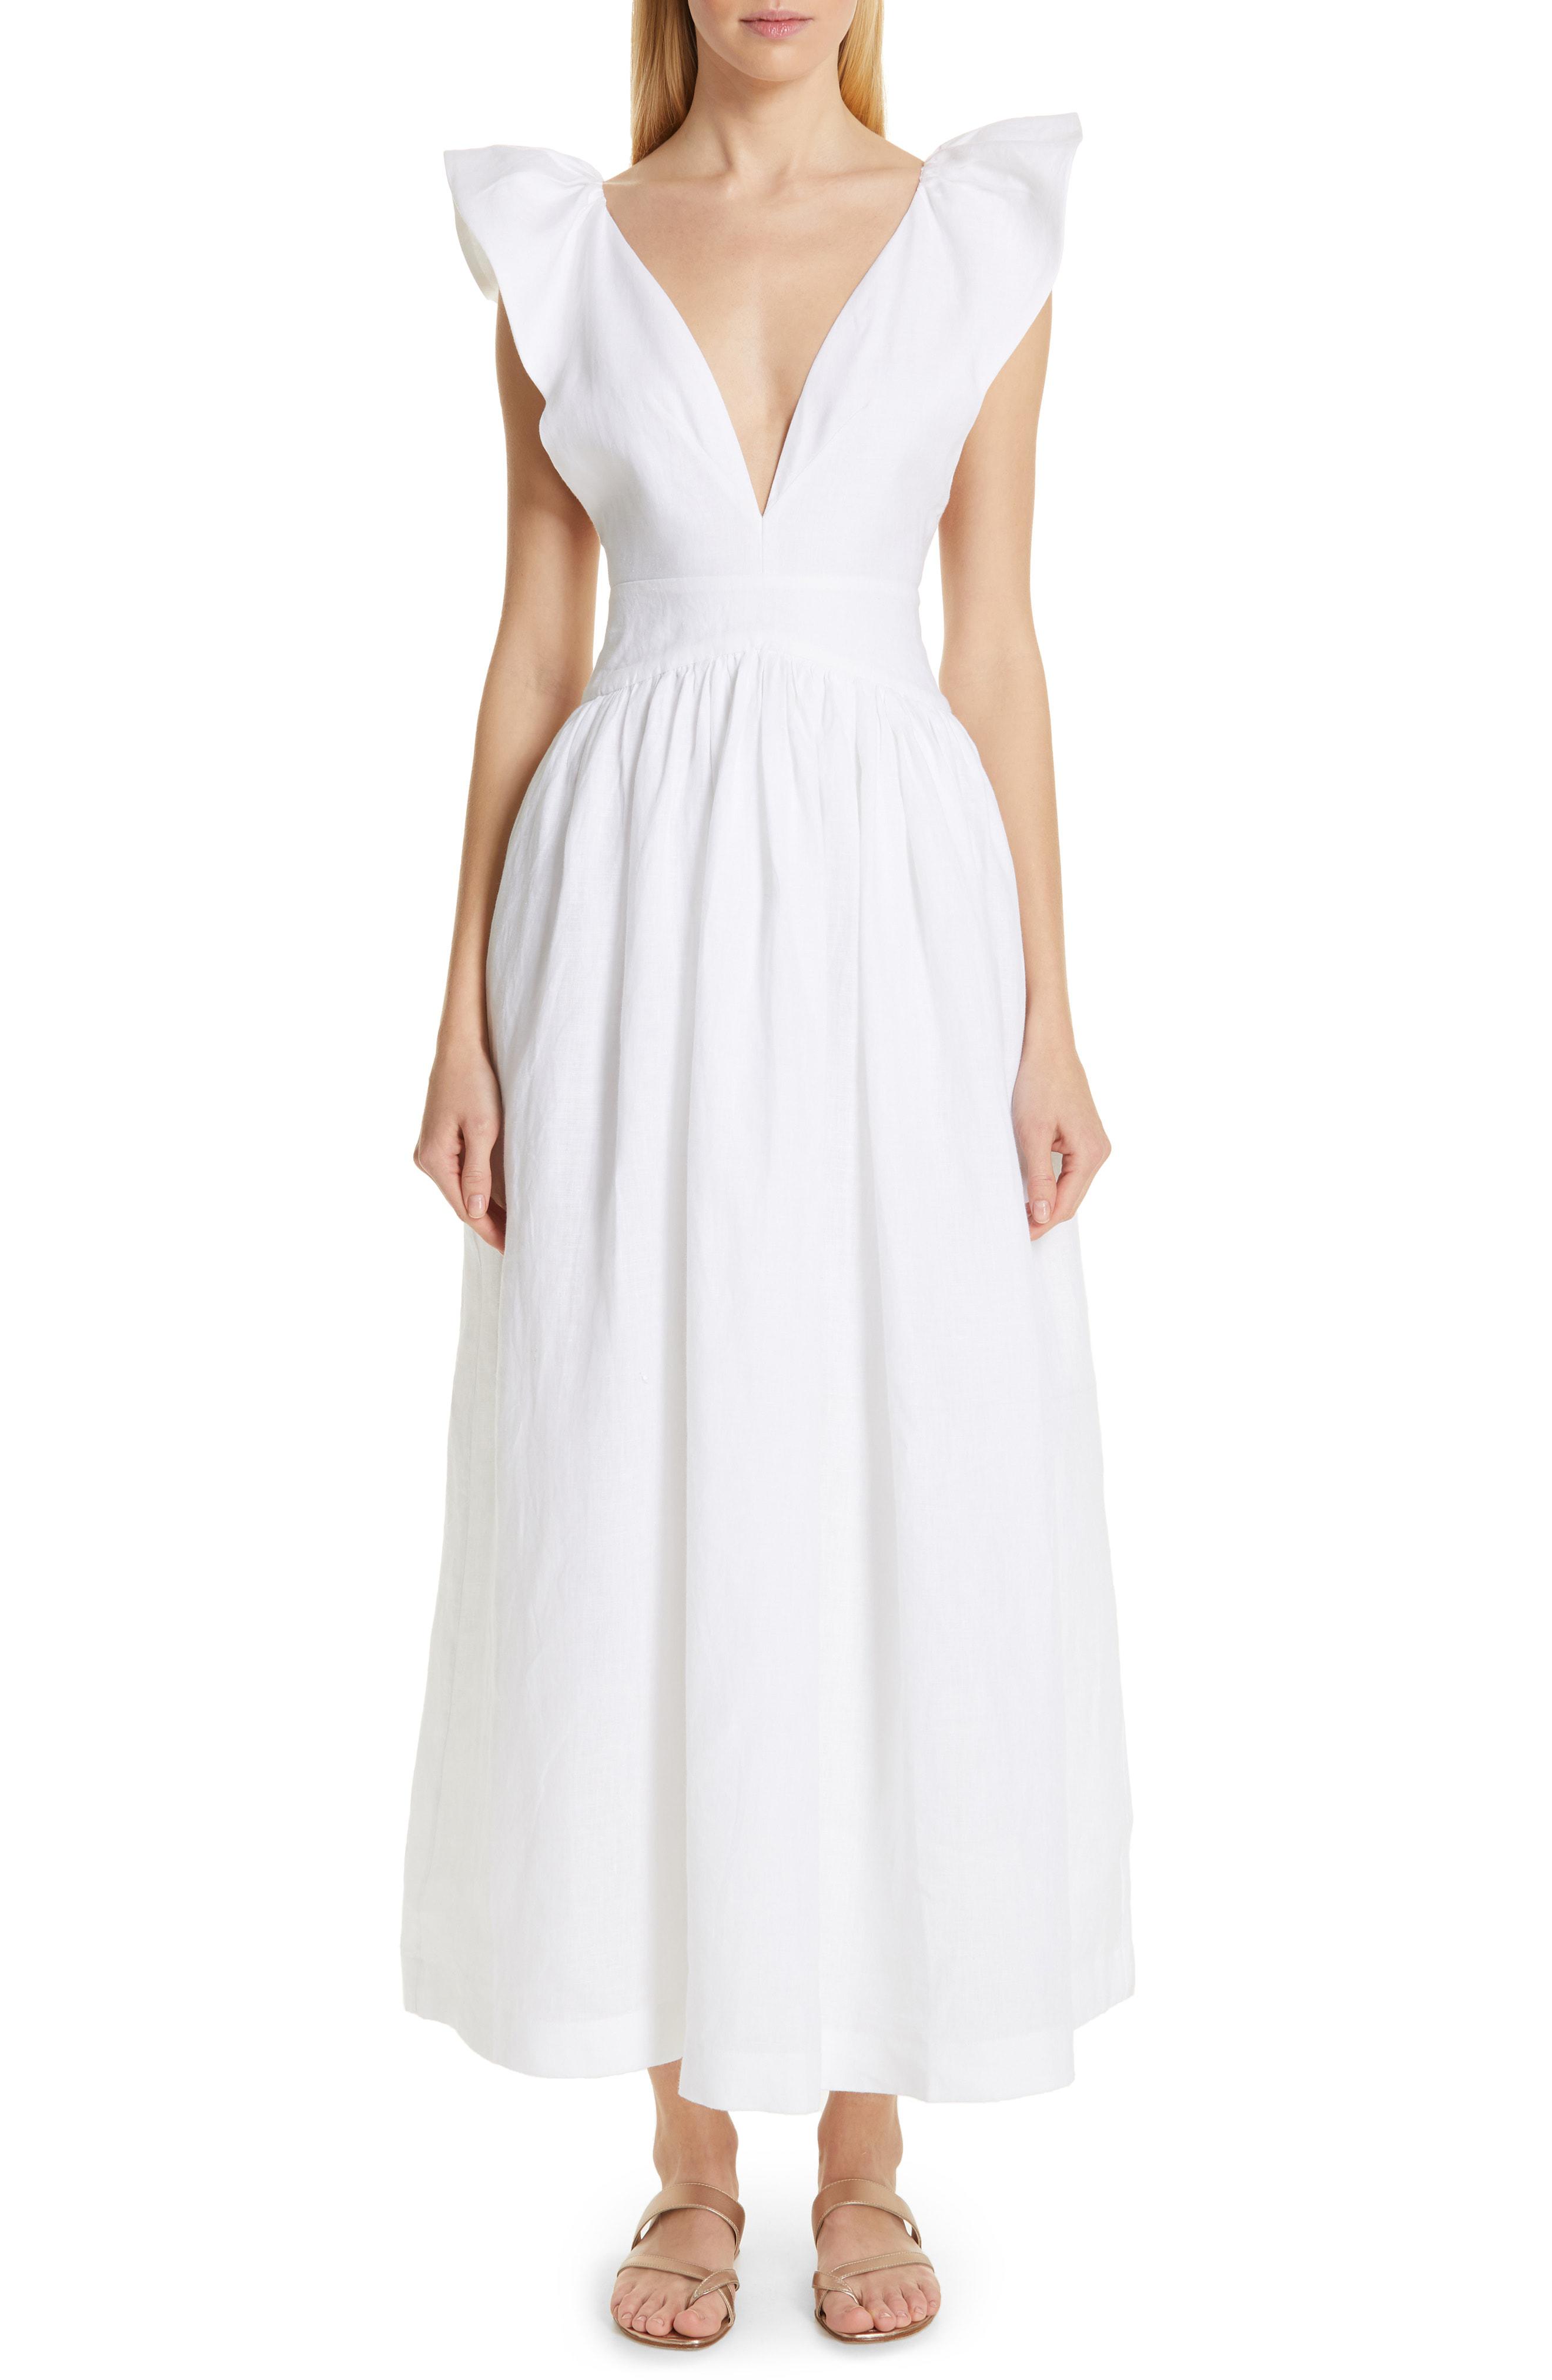 Lyst - Kalita Persephone Linen Maxi Dress in White